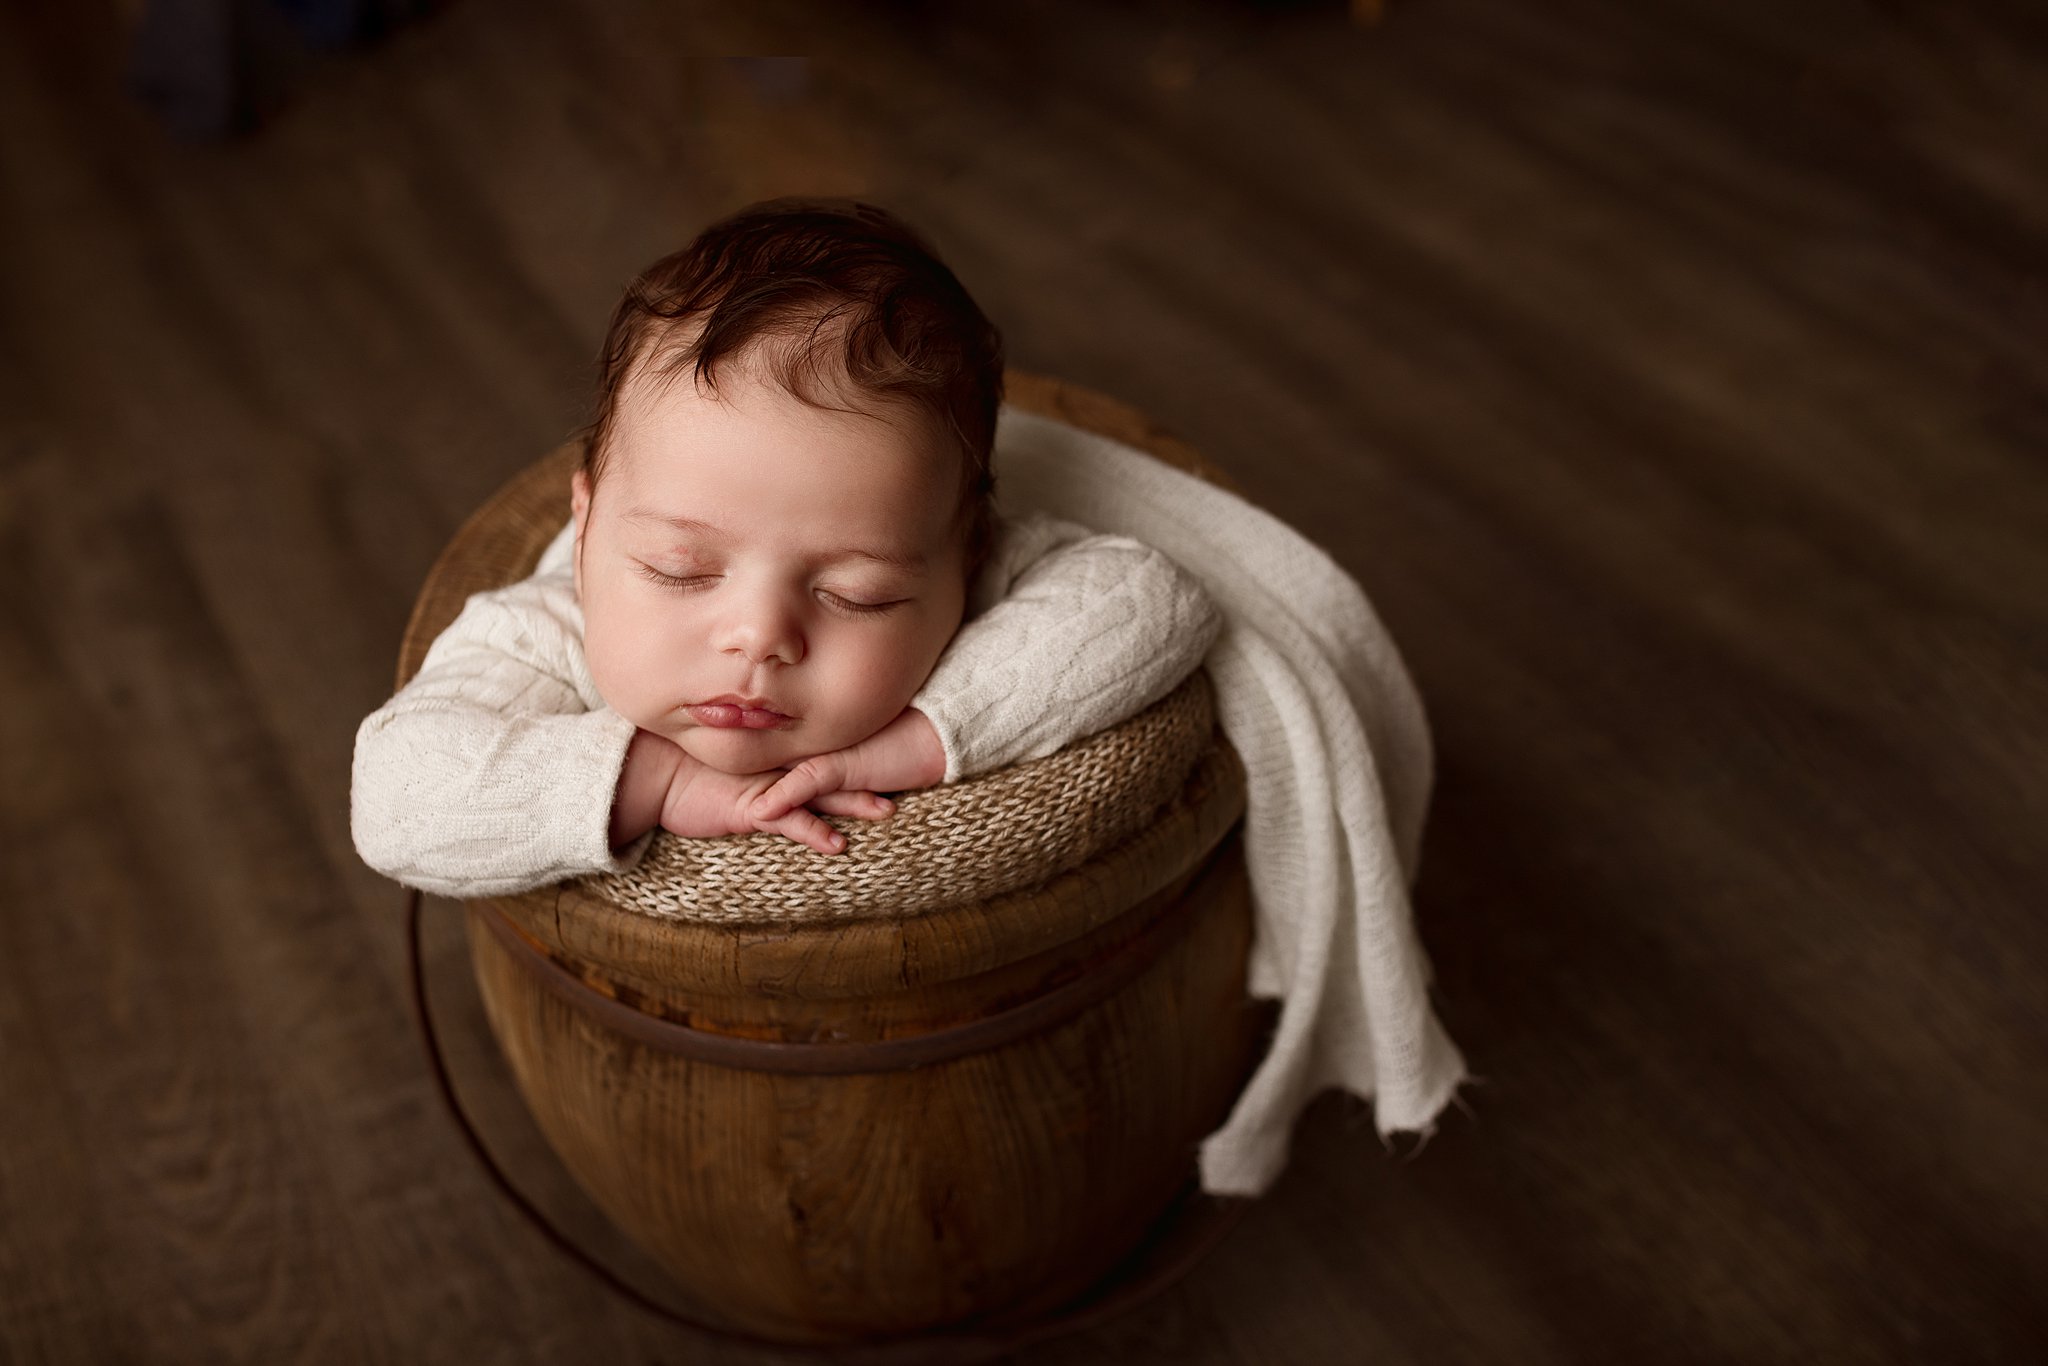 A newborn baby sleeps in a hardwood bucket wearing a white sweater resting head on it's hands